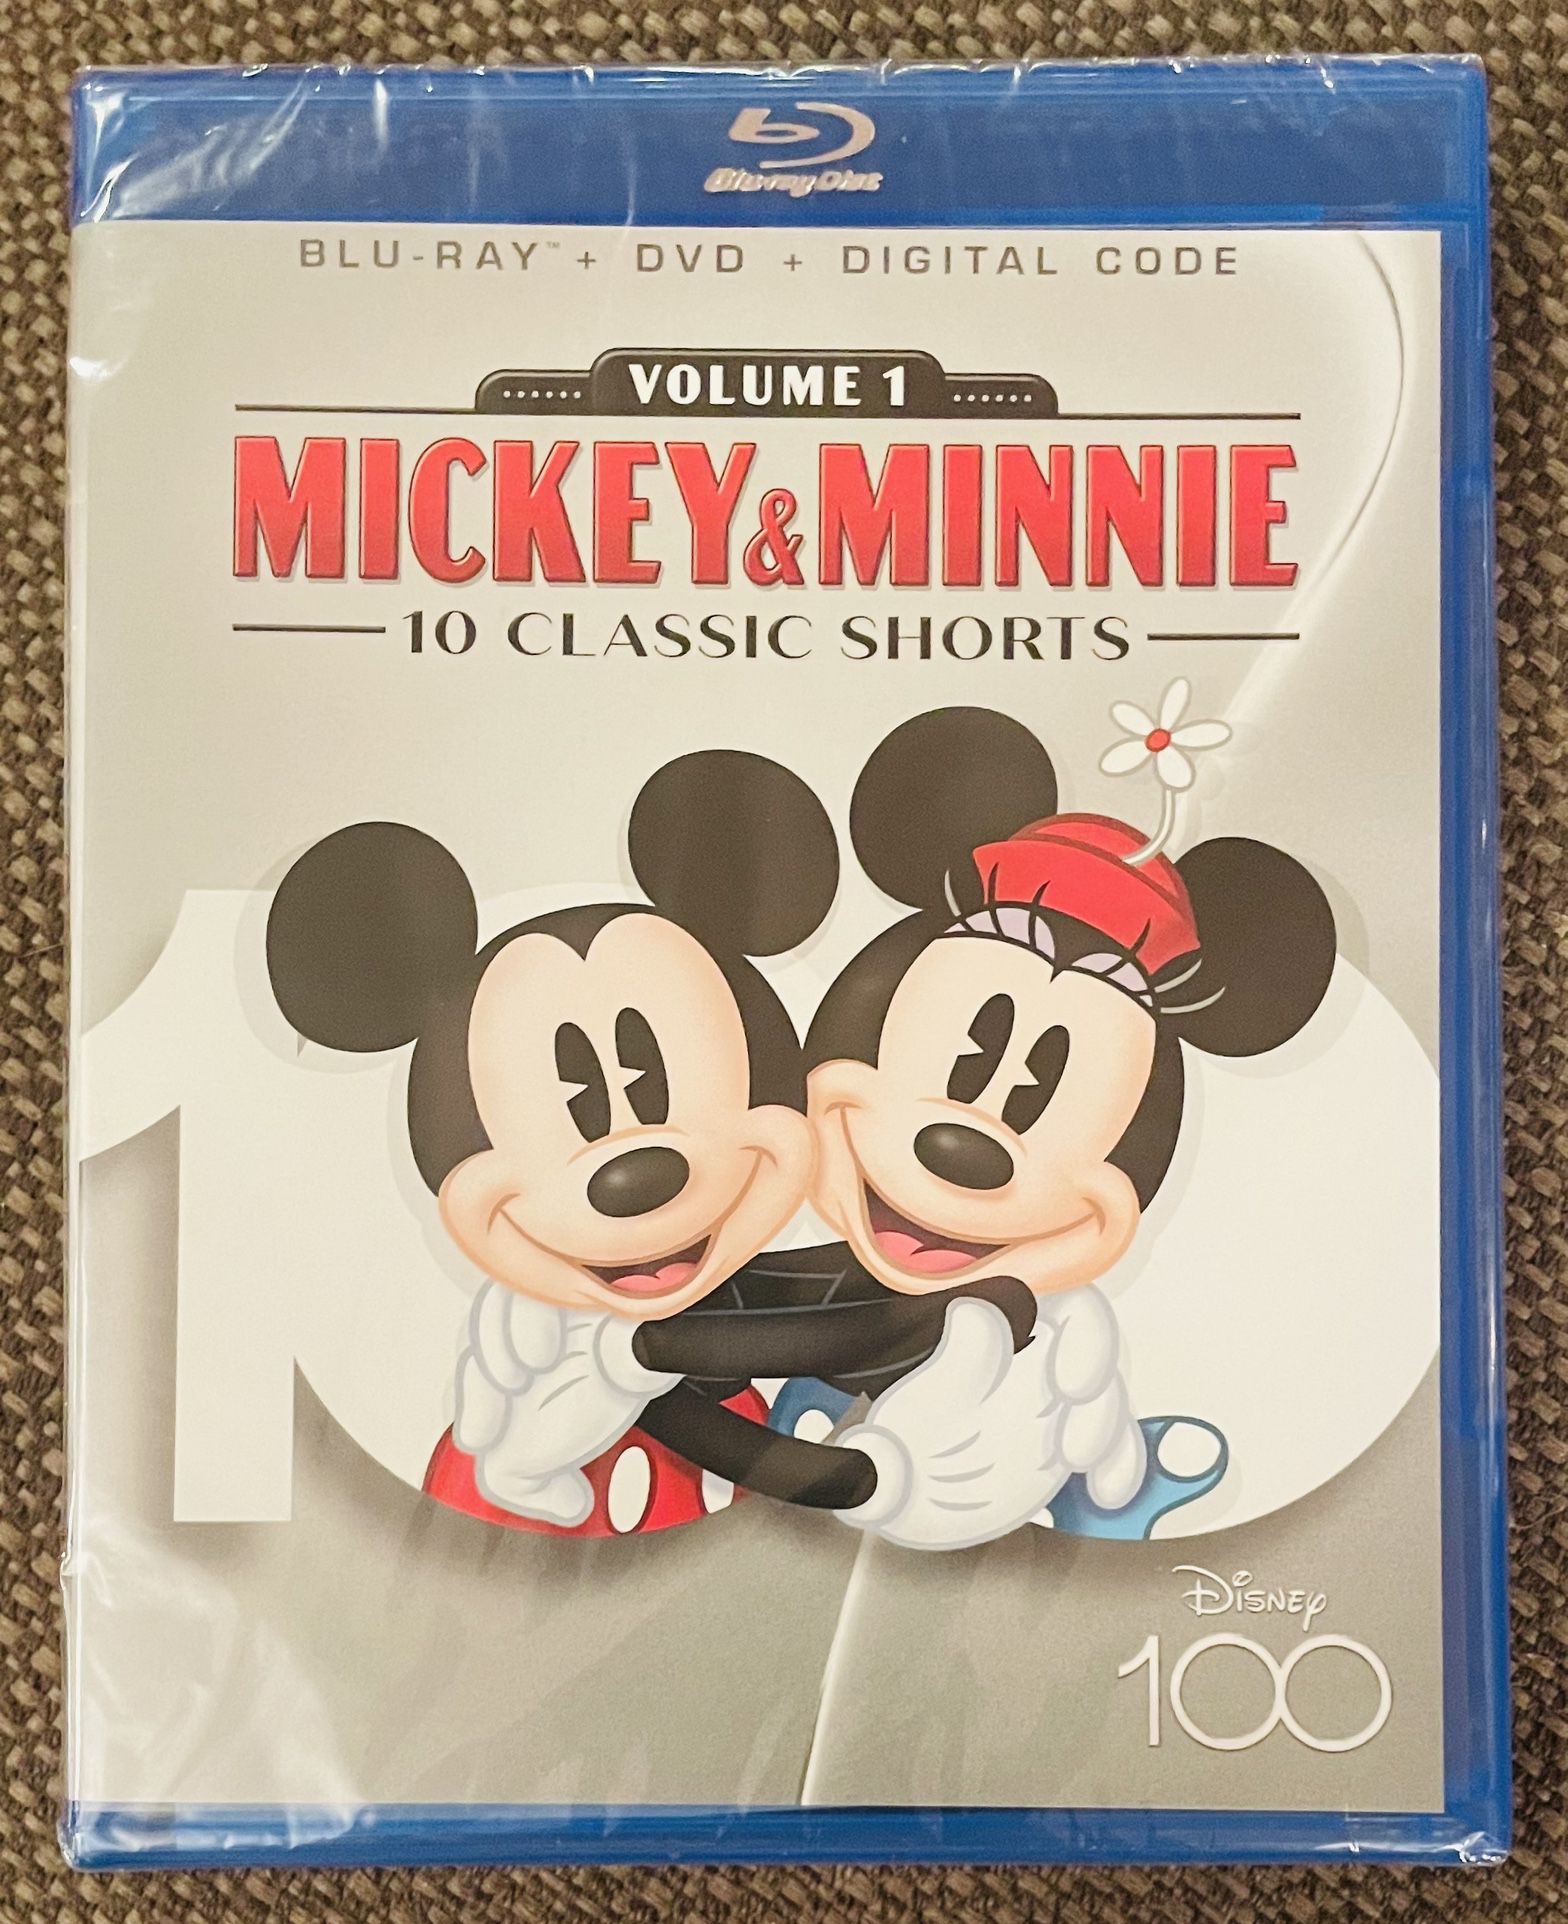 Mickey & Minnie 10 Classic shorts Volume 1 (Blu-Ray, DVD, Digital Code)